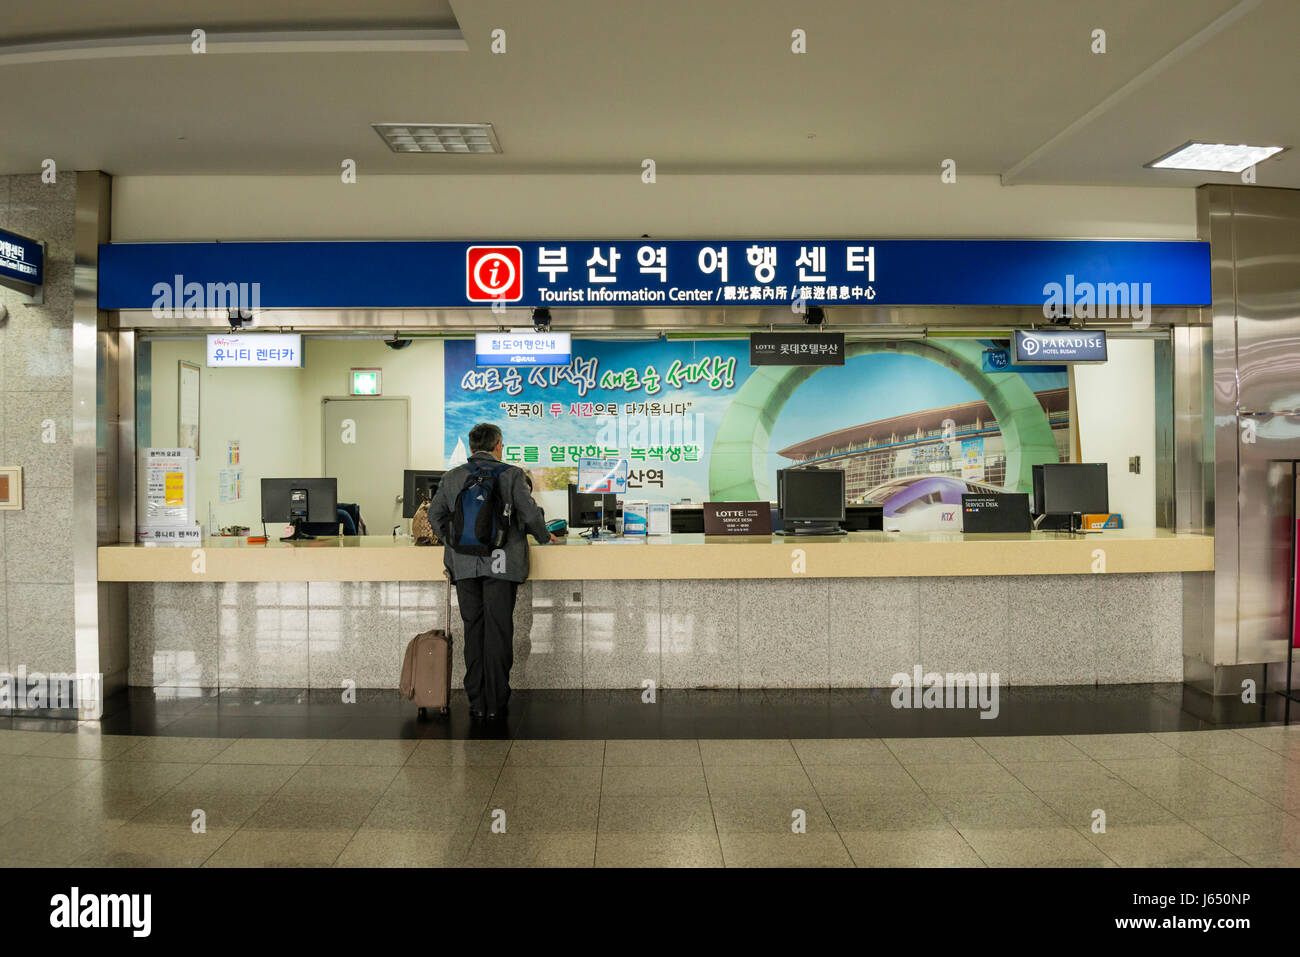 Tourist Information Center at Busan Railway Station Concourse, Busan Gwangyeoksi, South Korea Stock Photo